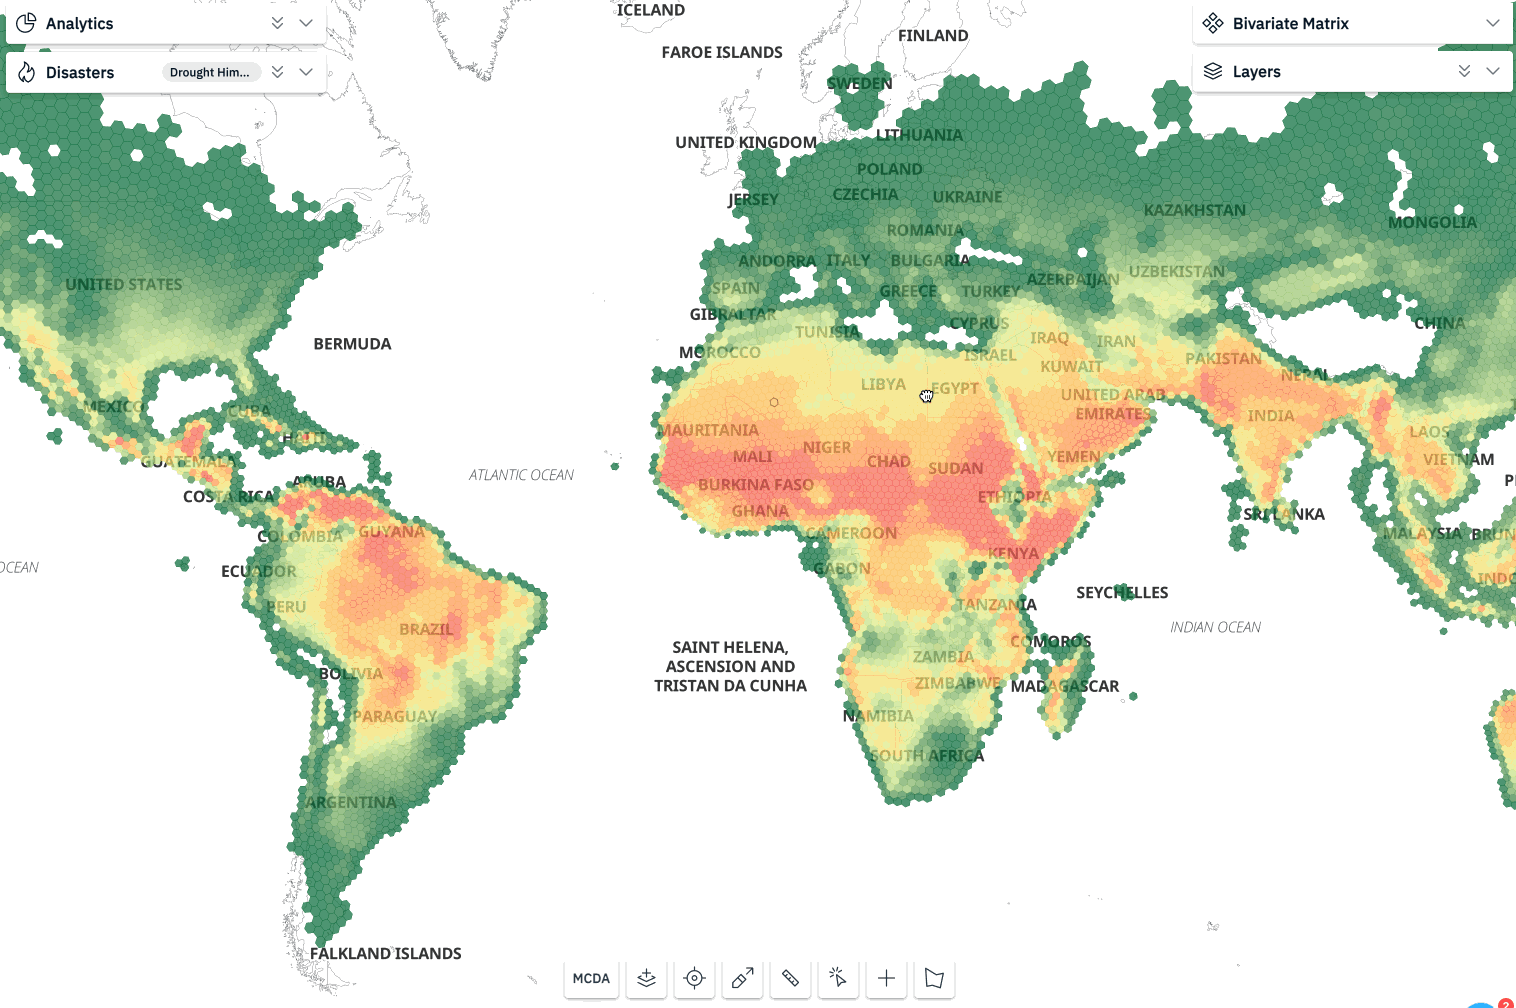 Global heat wave risk map